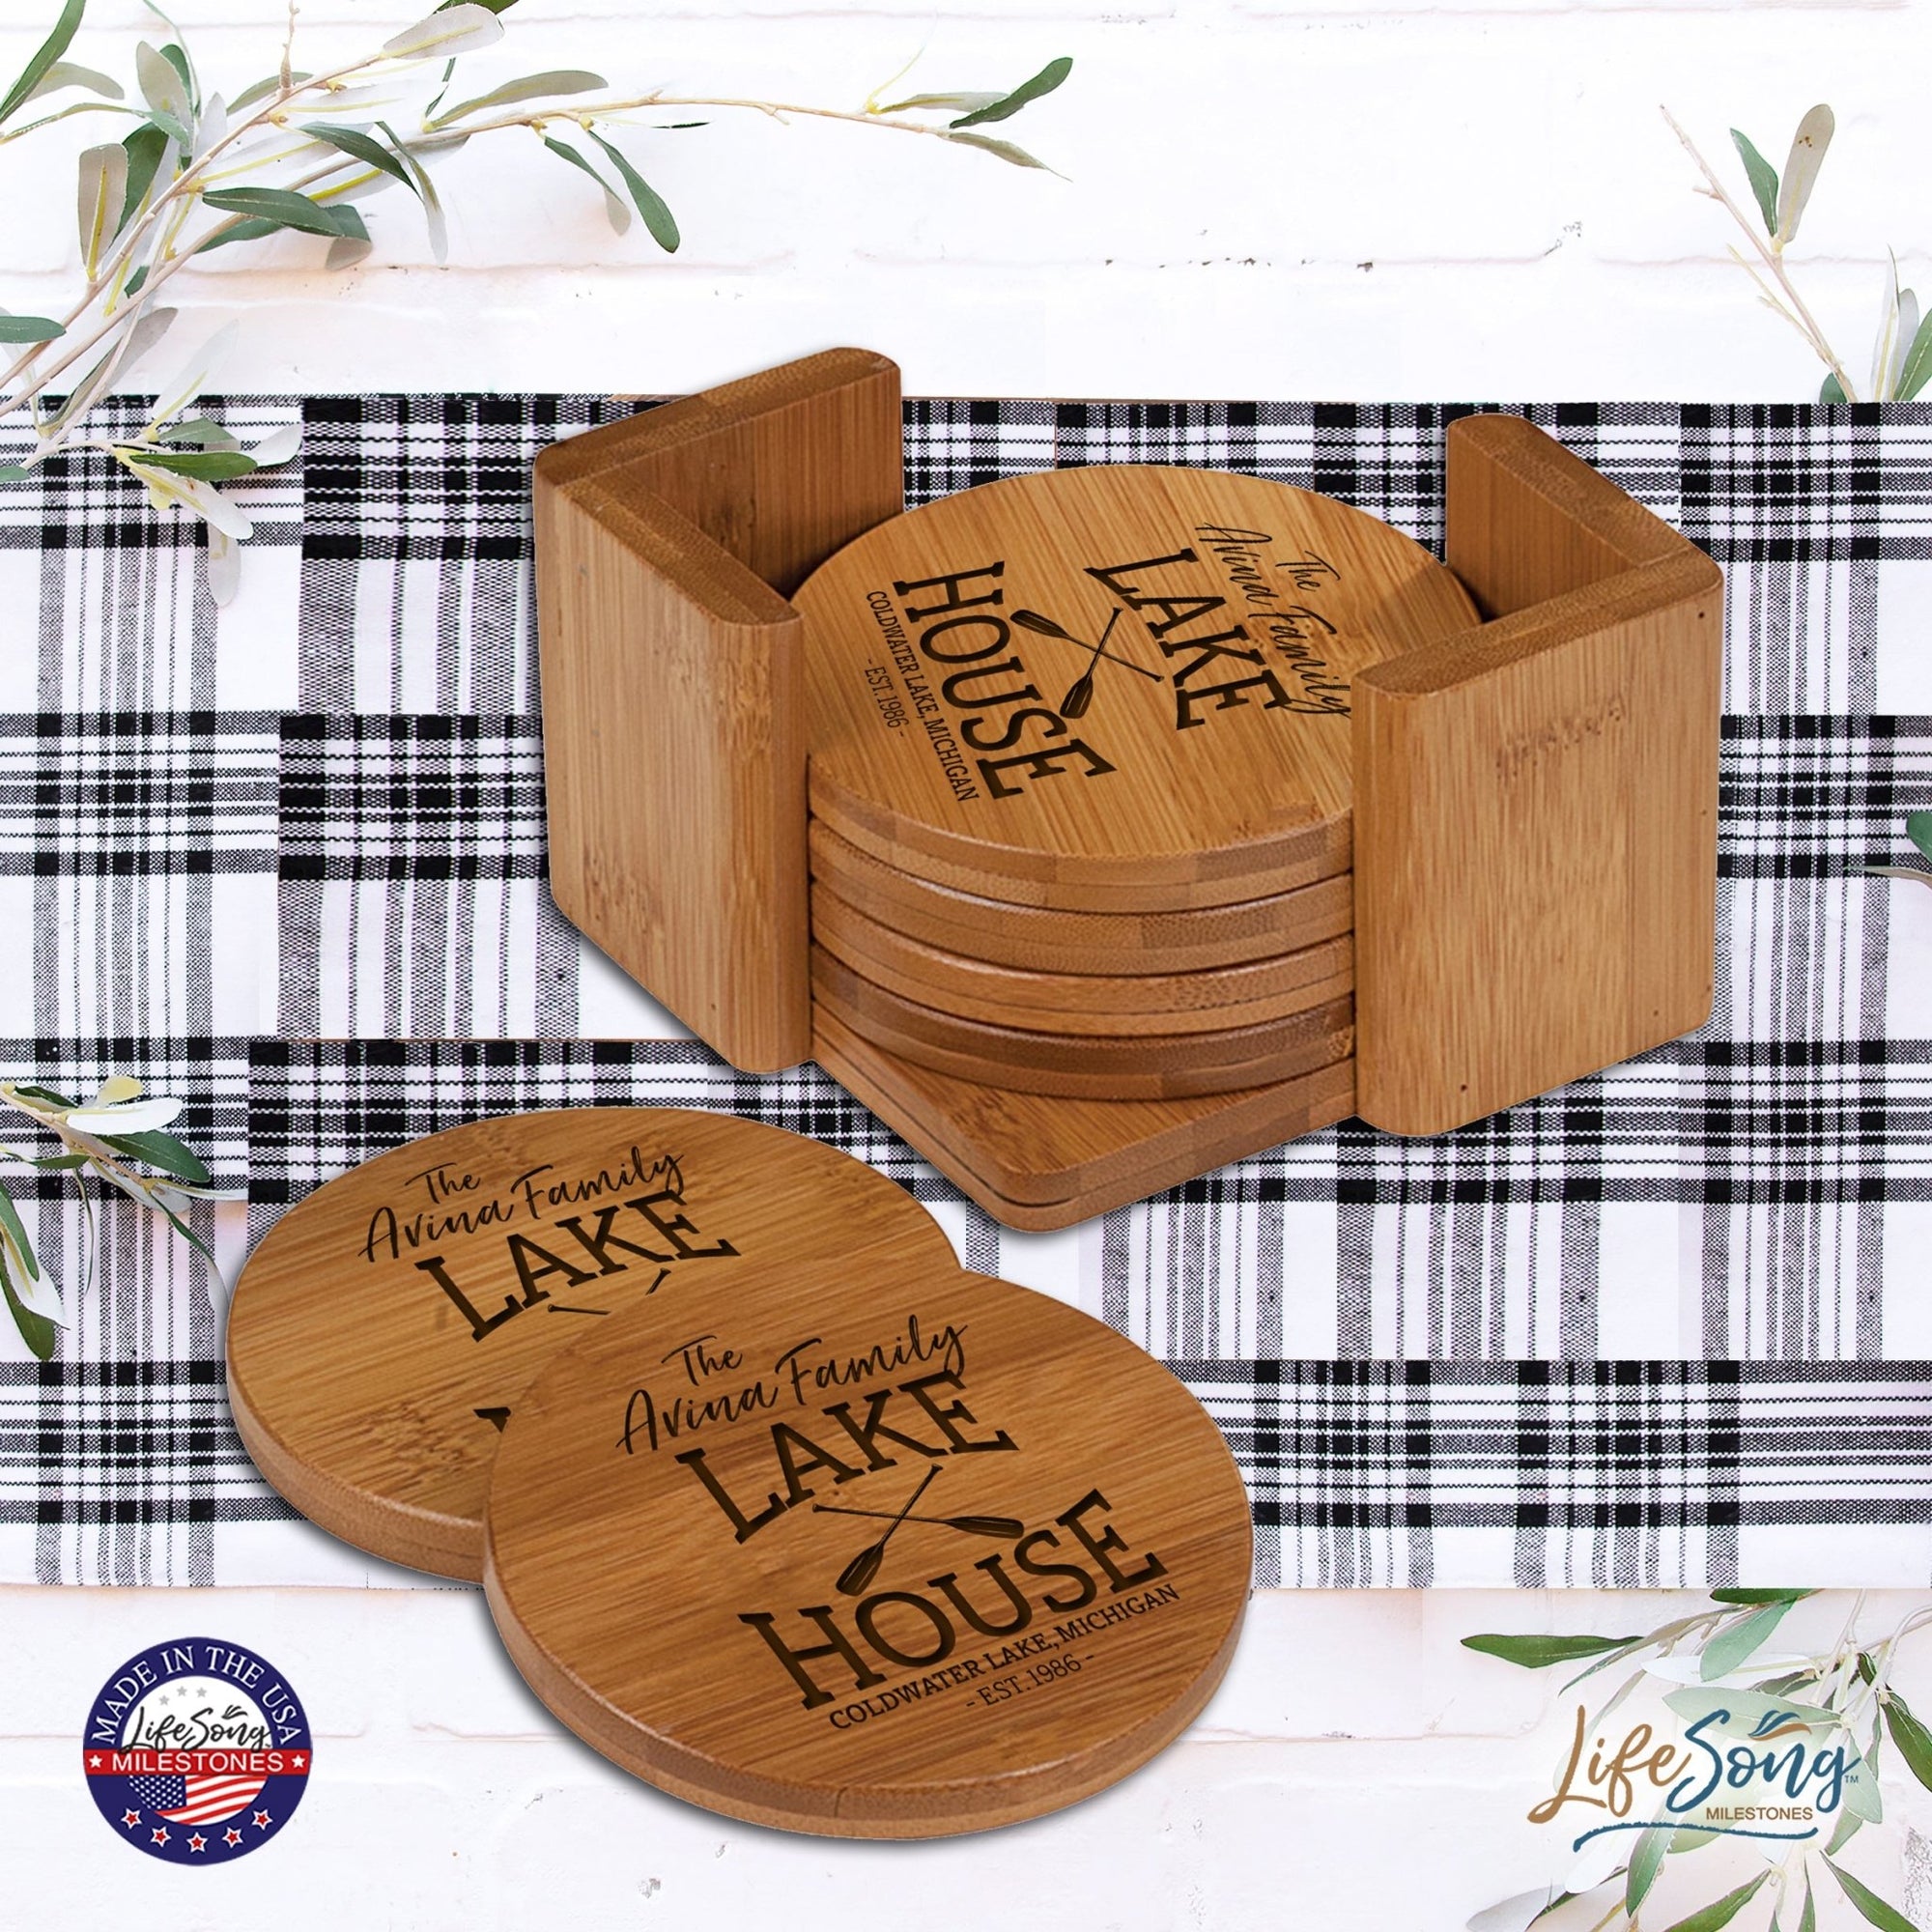 Custom Modern Inspirational 6pc Bamboo Coaster Set 4.5x4.5 Lake House (paddles) - LifeSong Milestones